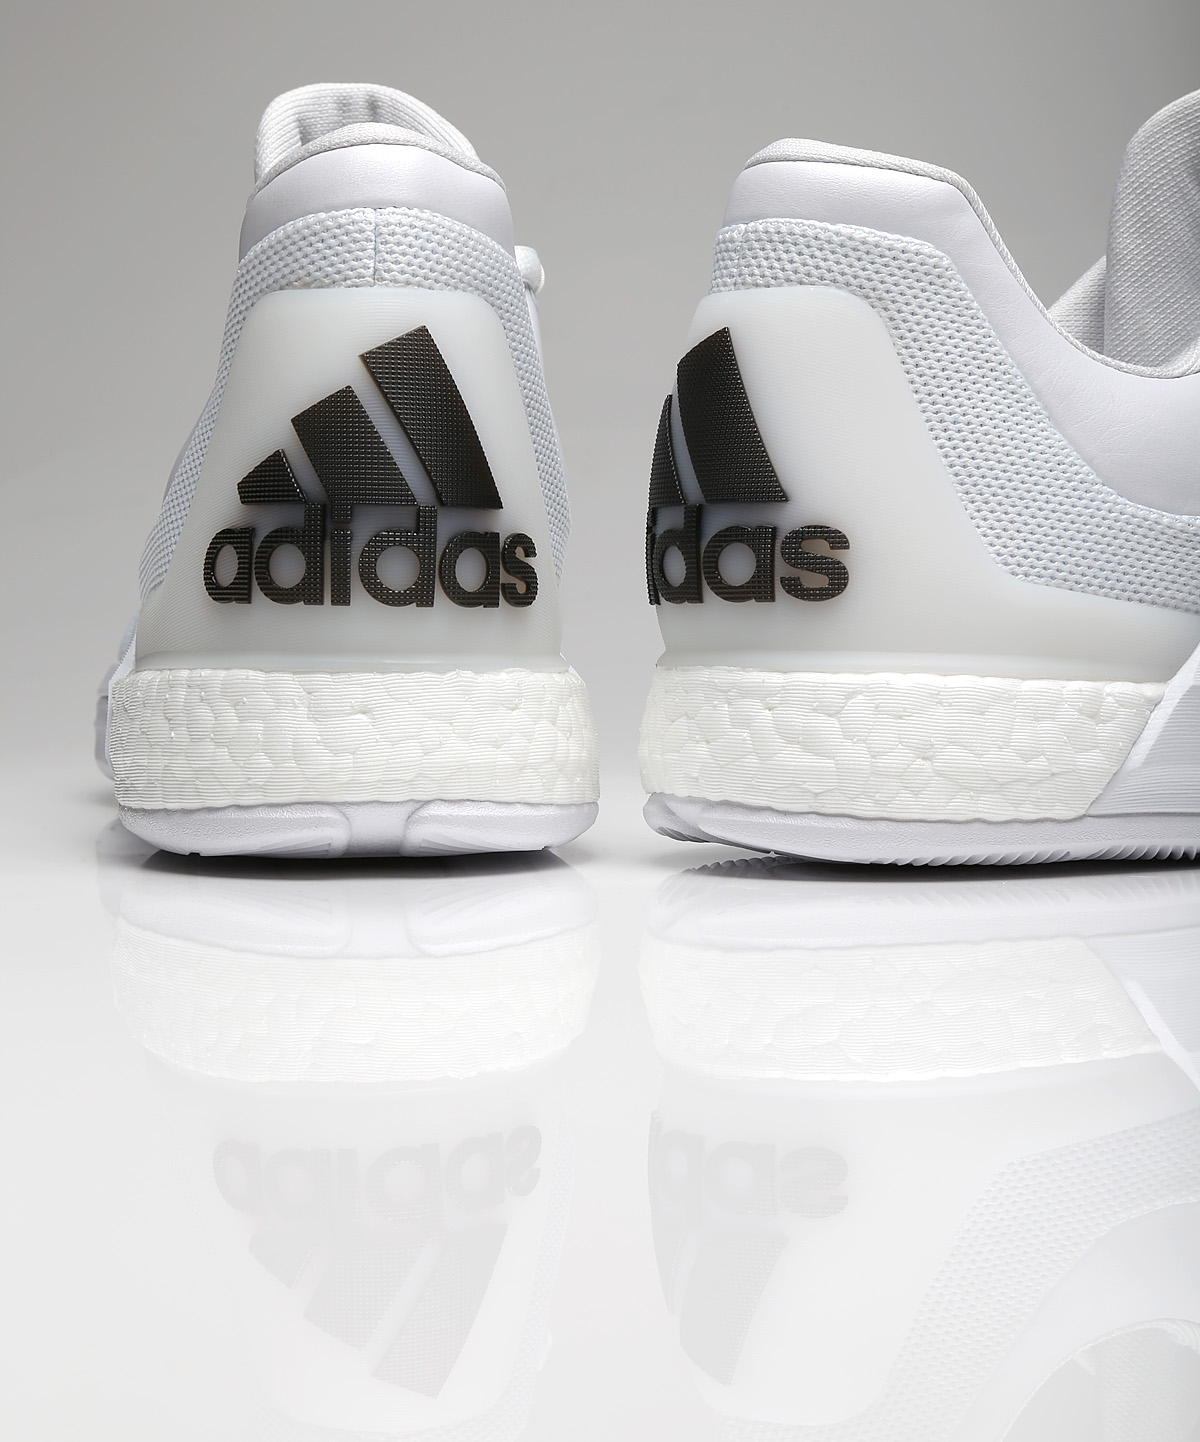 adidas-Crazy-Light-Boost-2015-White-pe-hardens-04